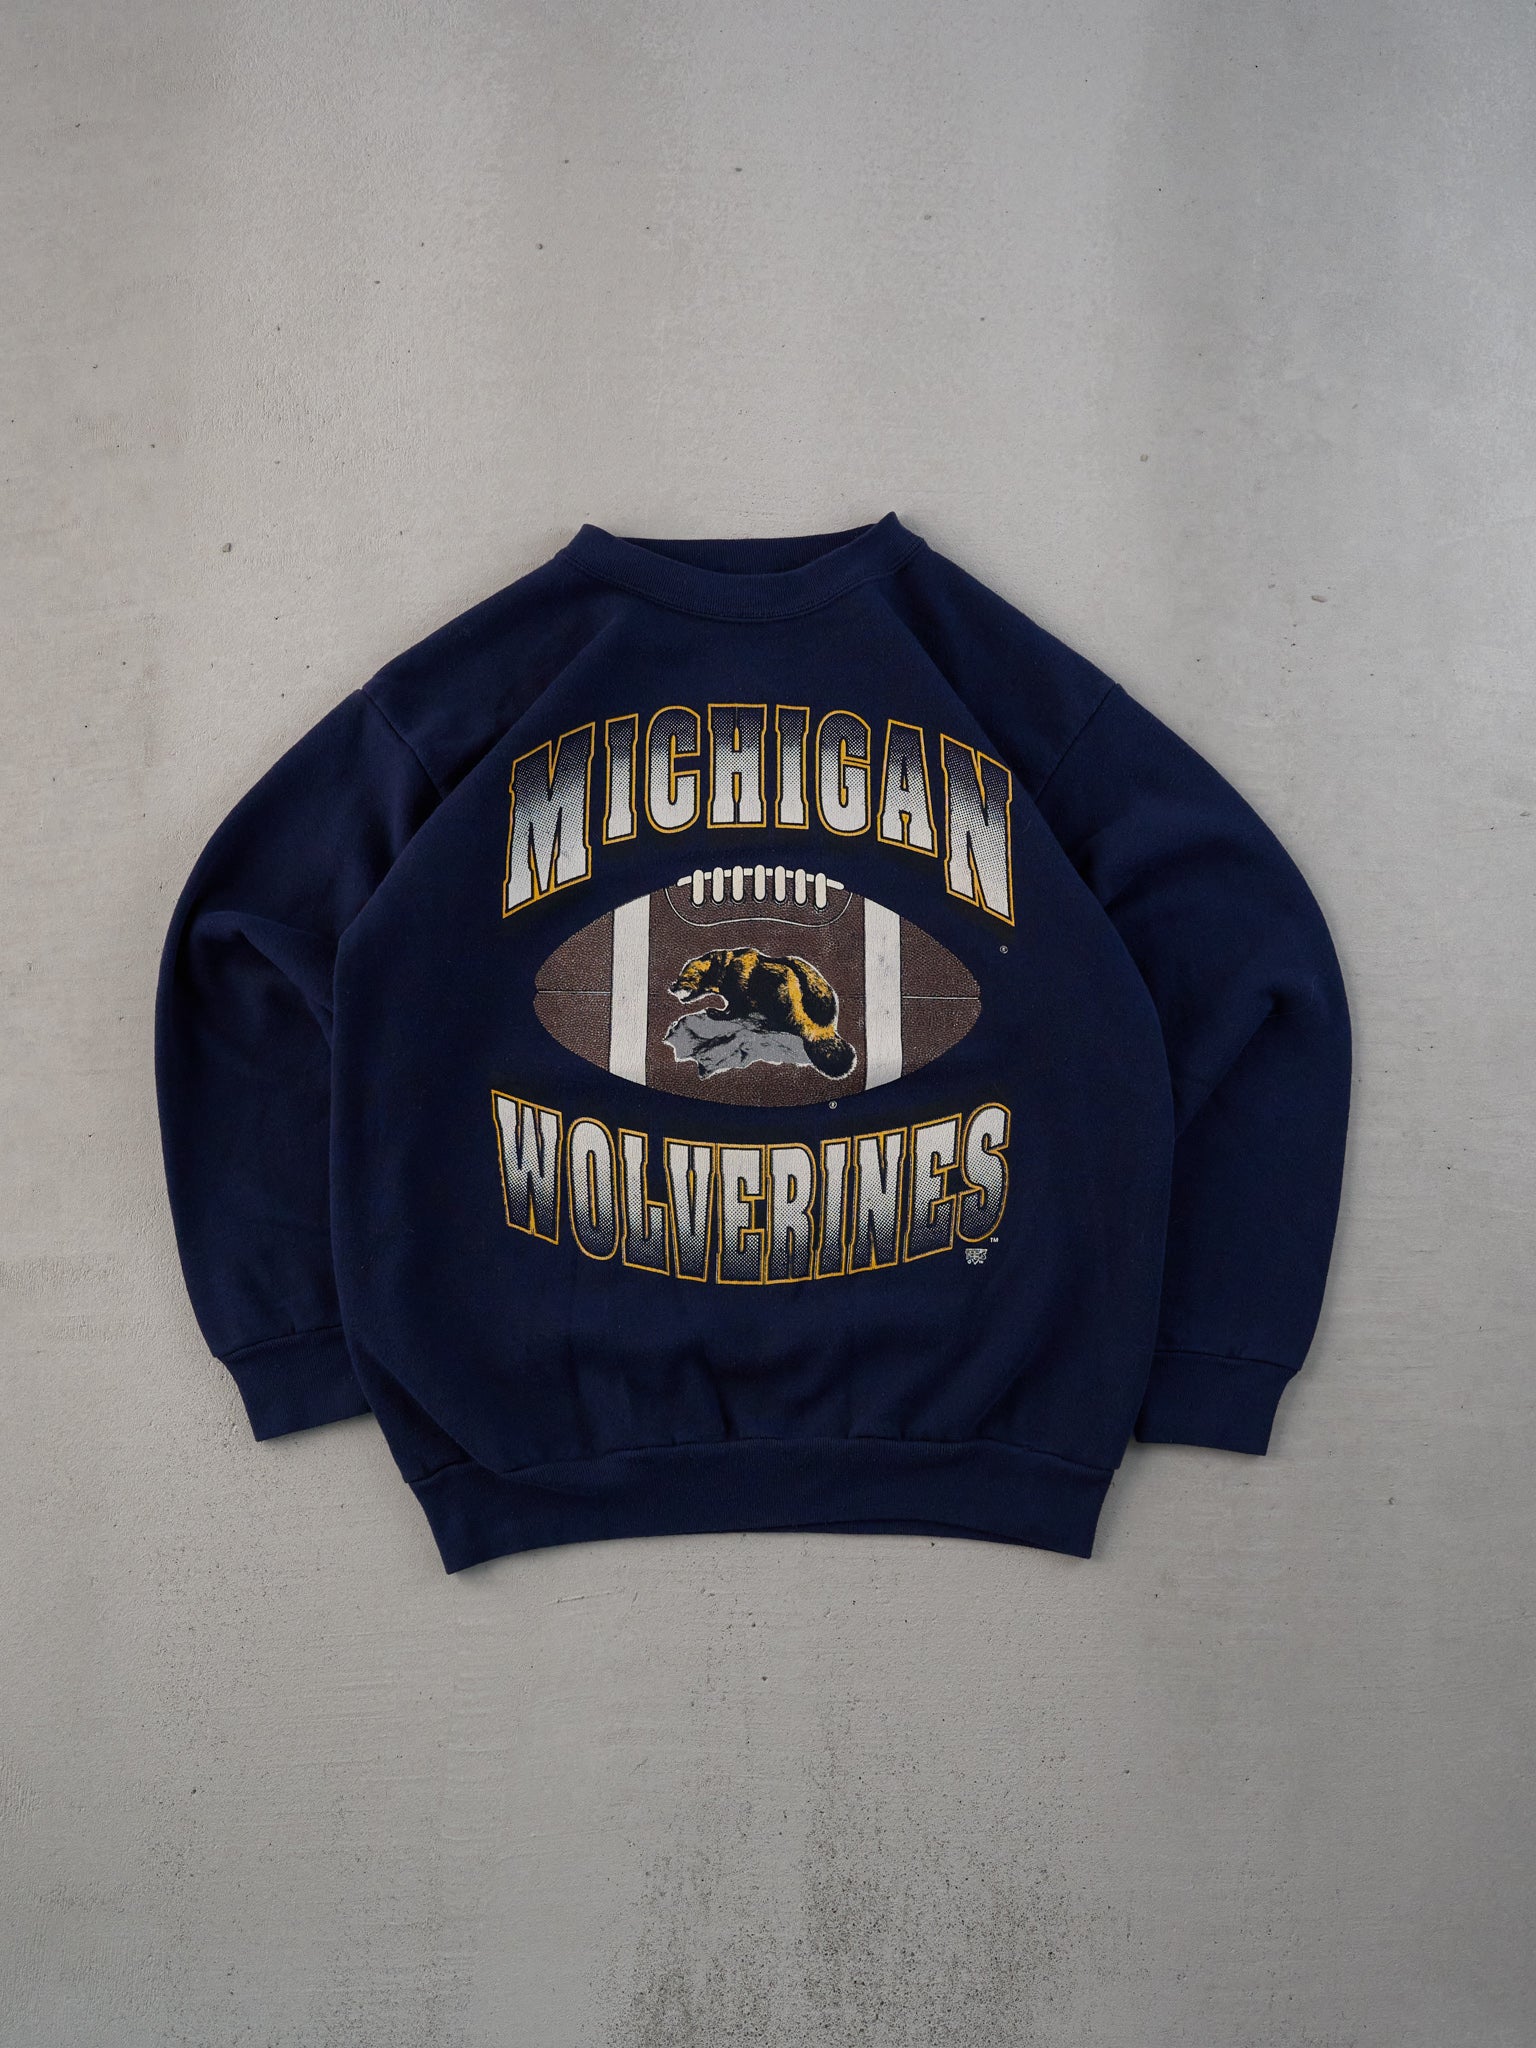 Vintage 90s Navy Blue Michigan Wolverines Football Graphic Crewneck (M)